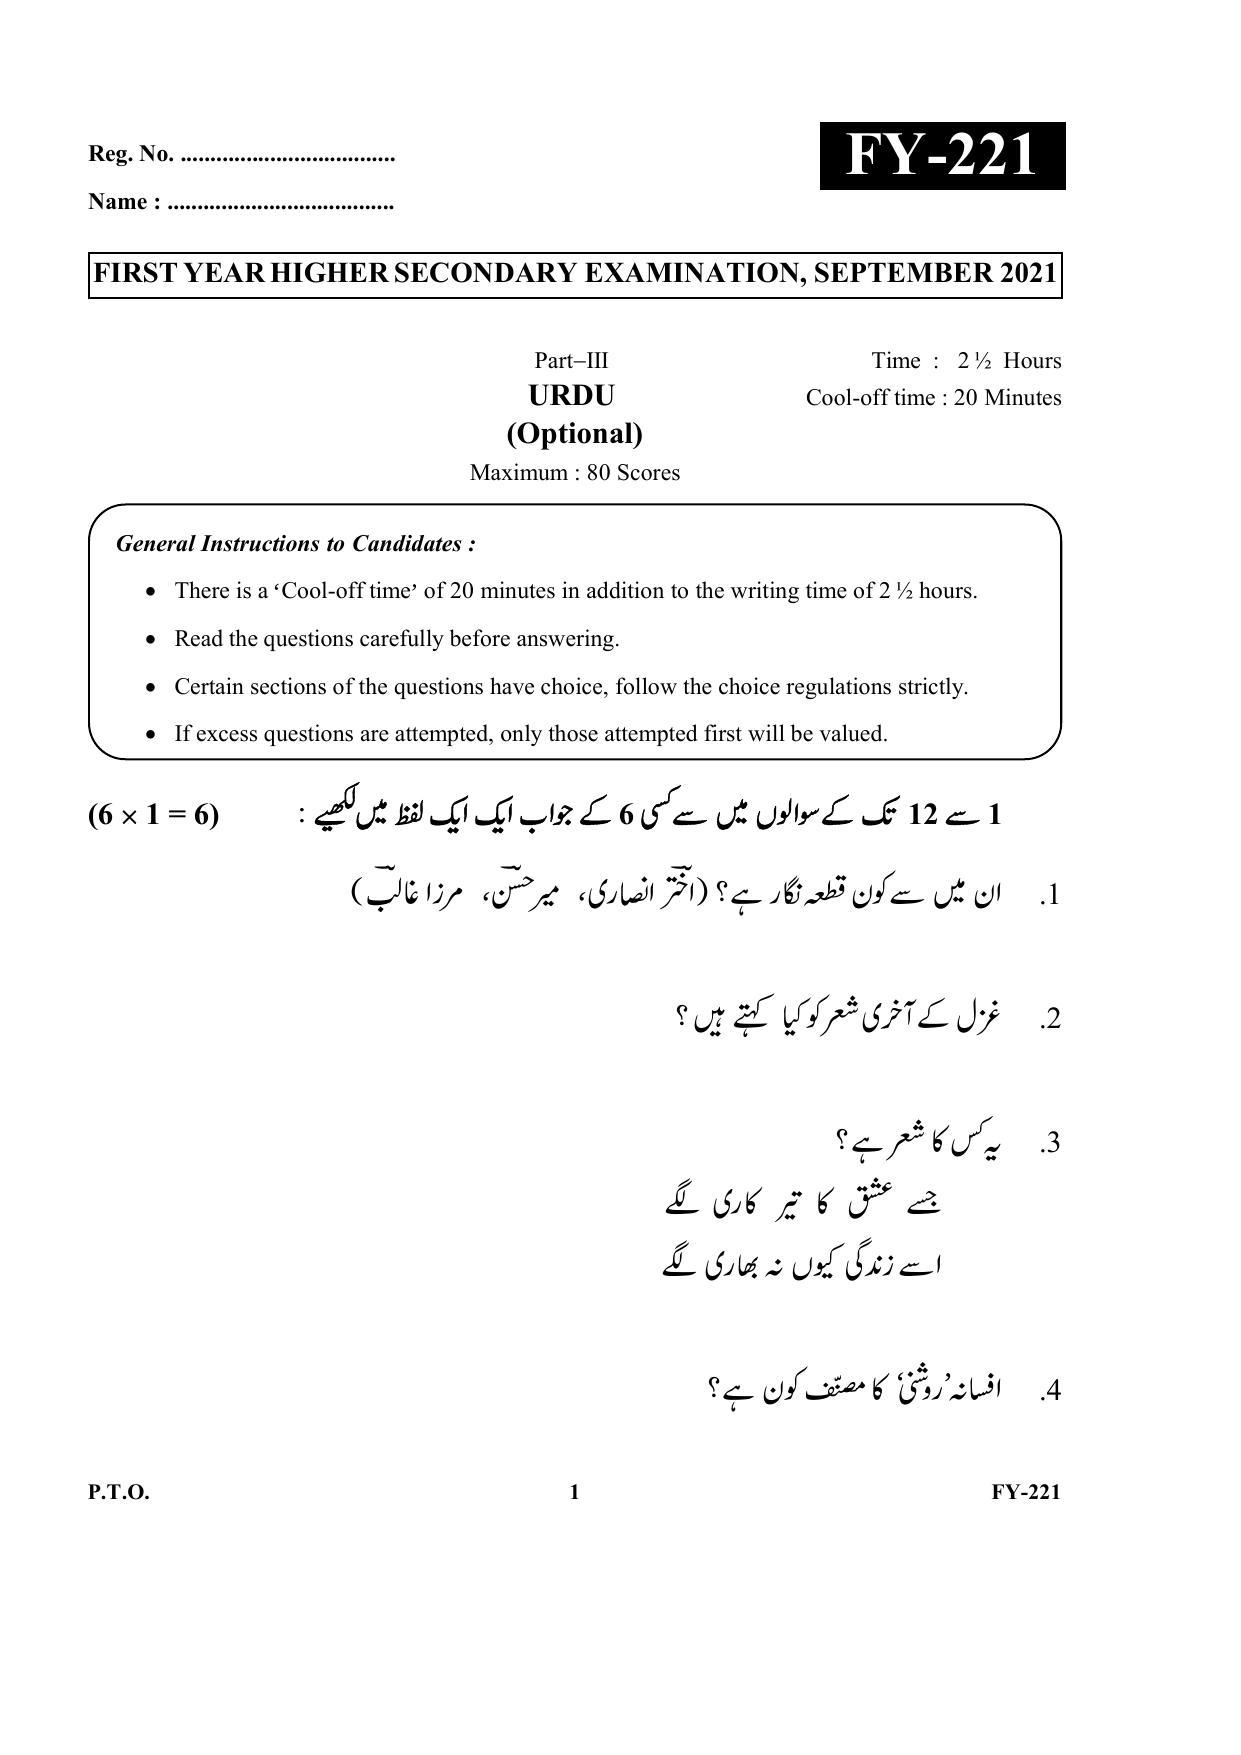 Kerala Plus One (Class 11th) Part-III Urdu-Optional Question Paper 2021 - Page 1